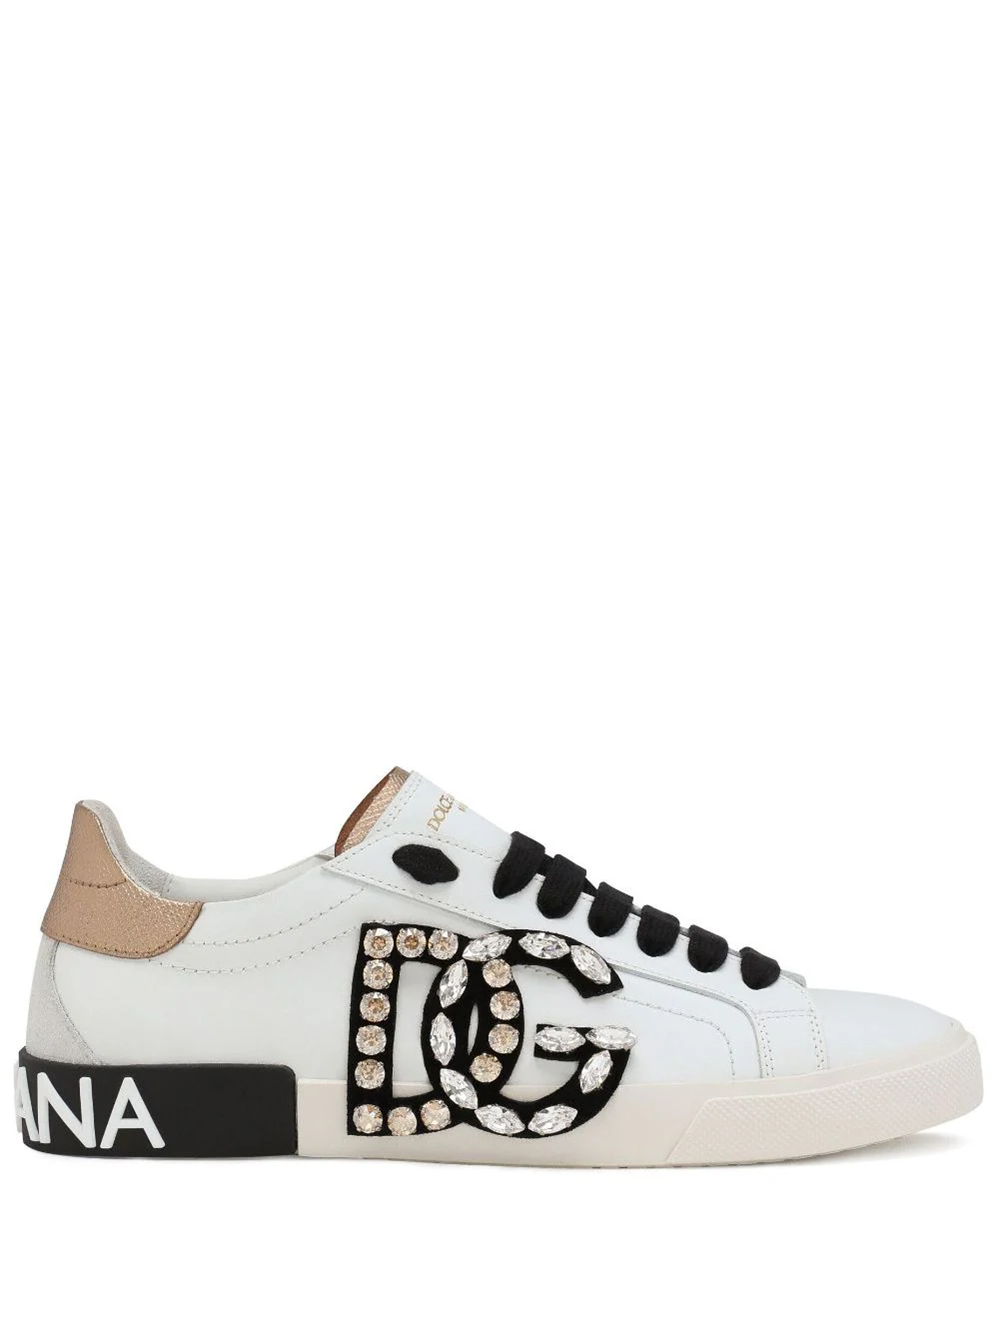 Dolce & Gabbana Portofino Sneakers With Rhinestones In White